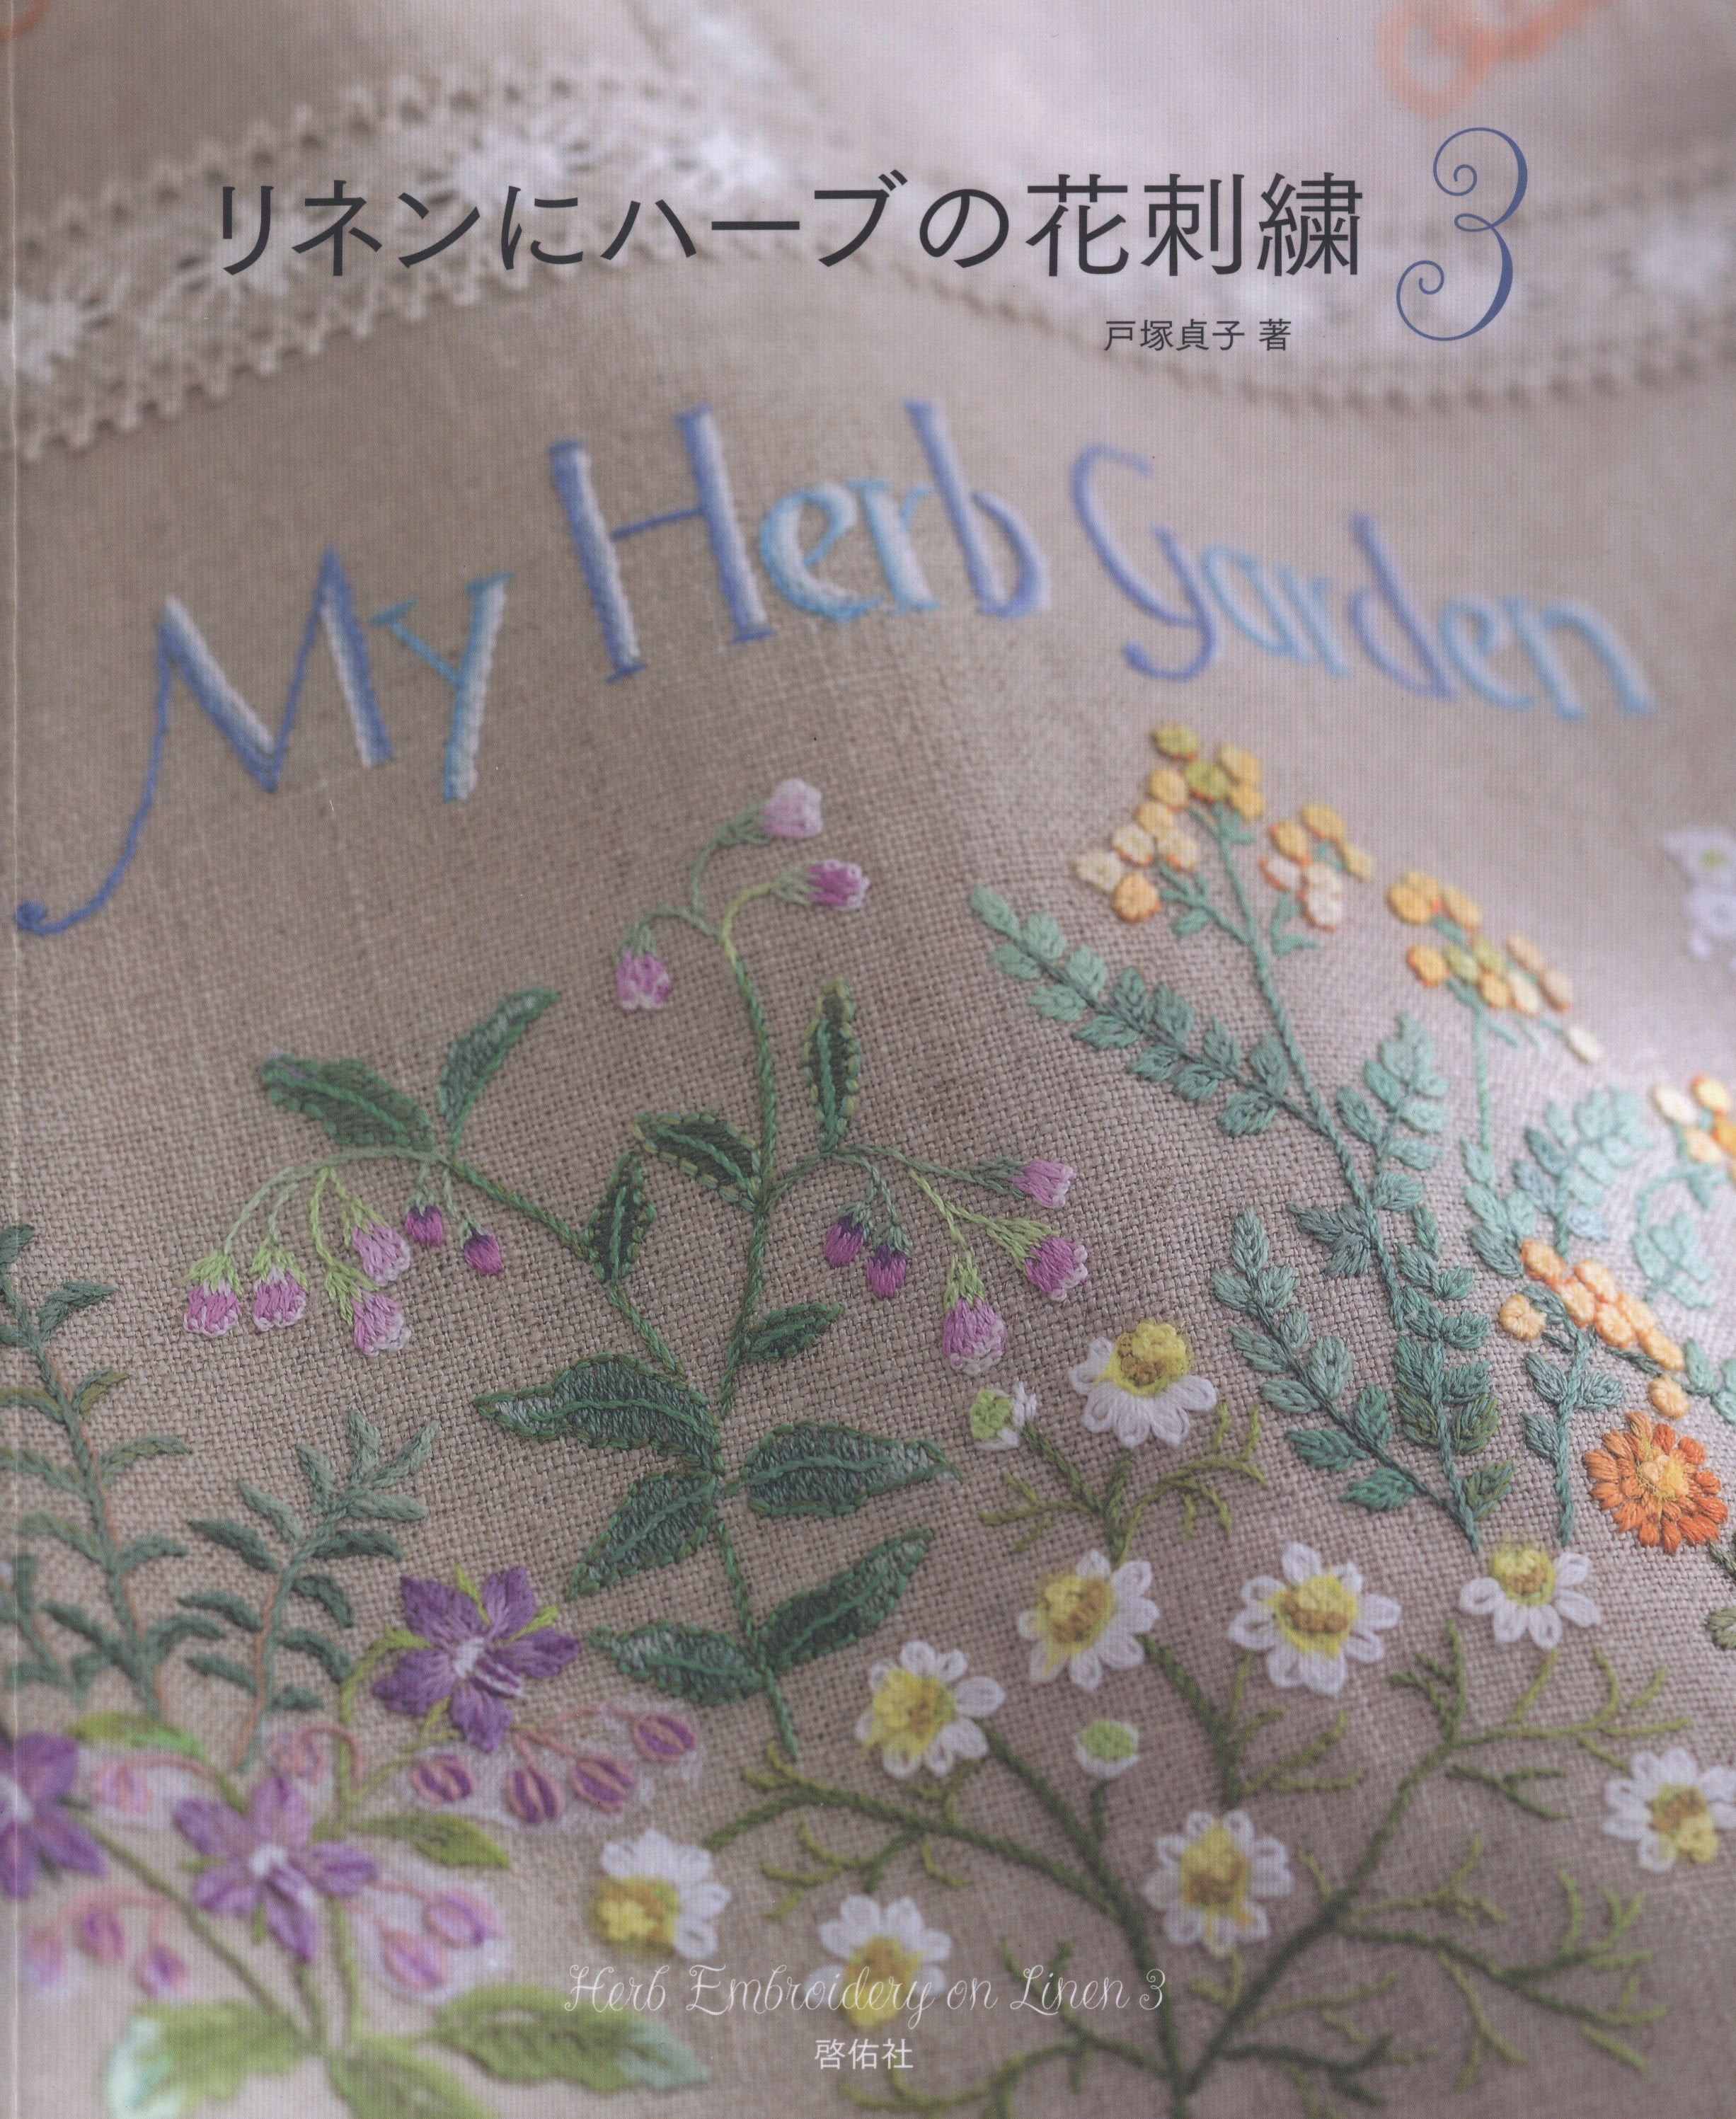 Herb Embroidery Patterns Herb Garden Embroidery Patterns Book Embroidery Tutorial Book Japanese Craft Book Pdf Instant Download